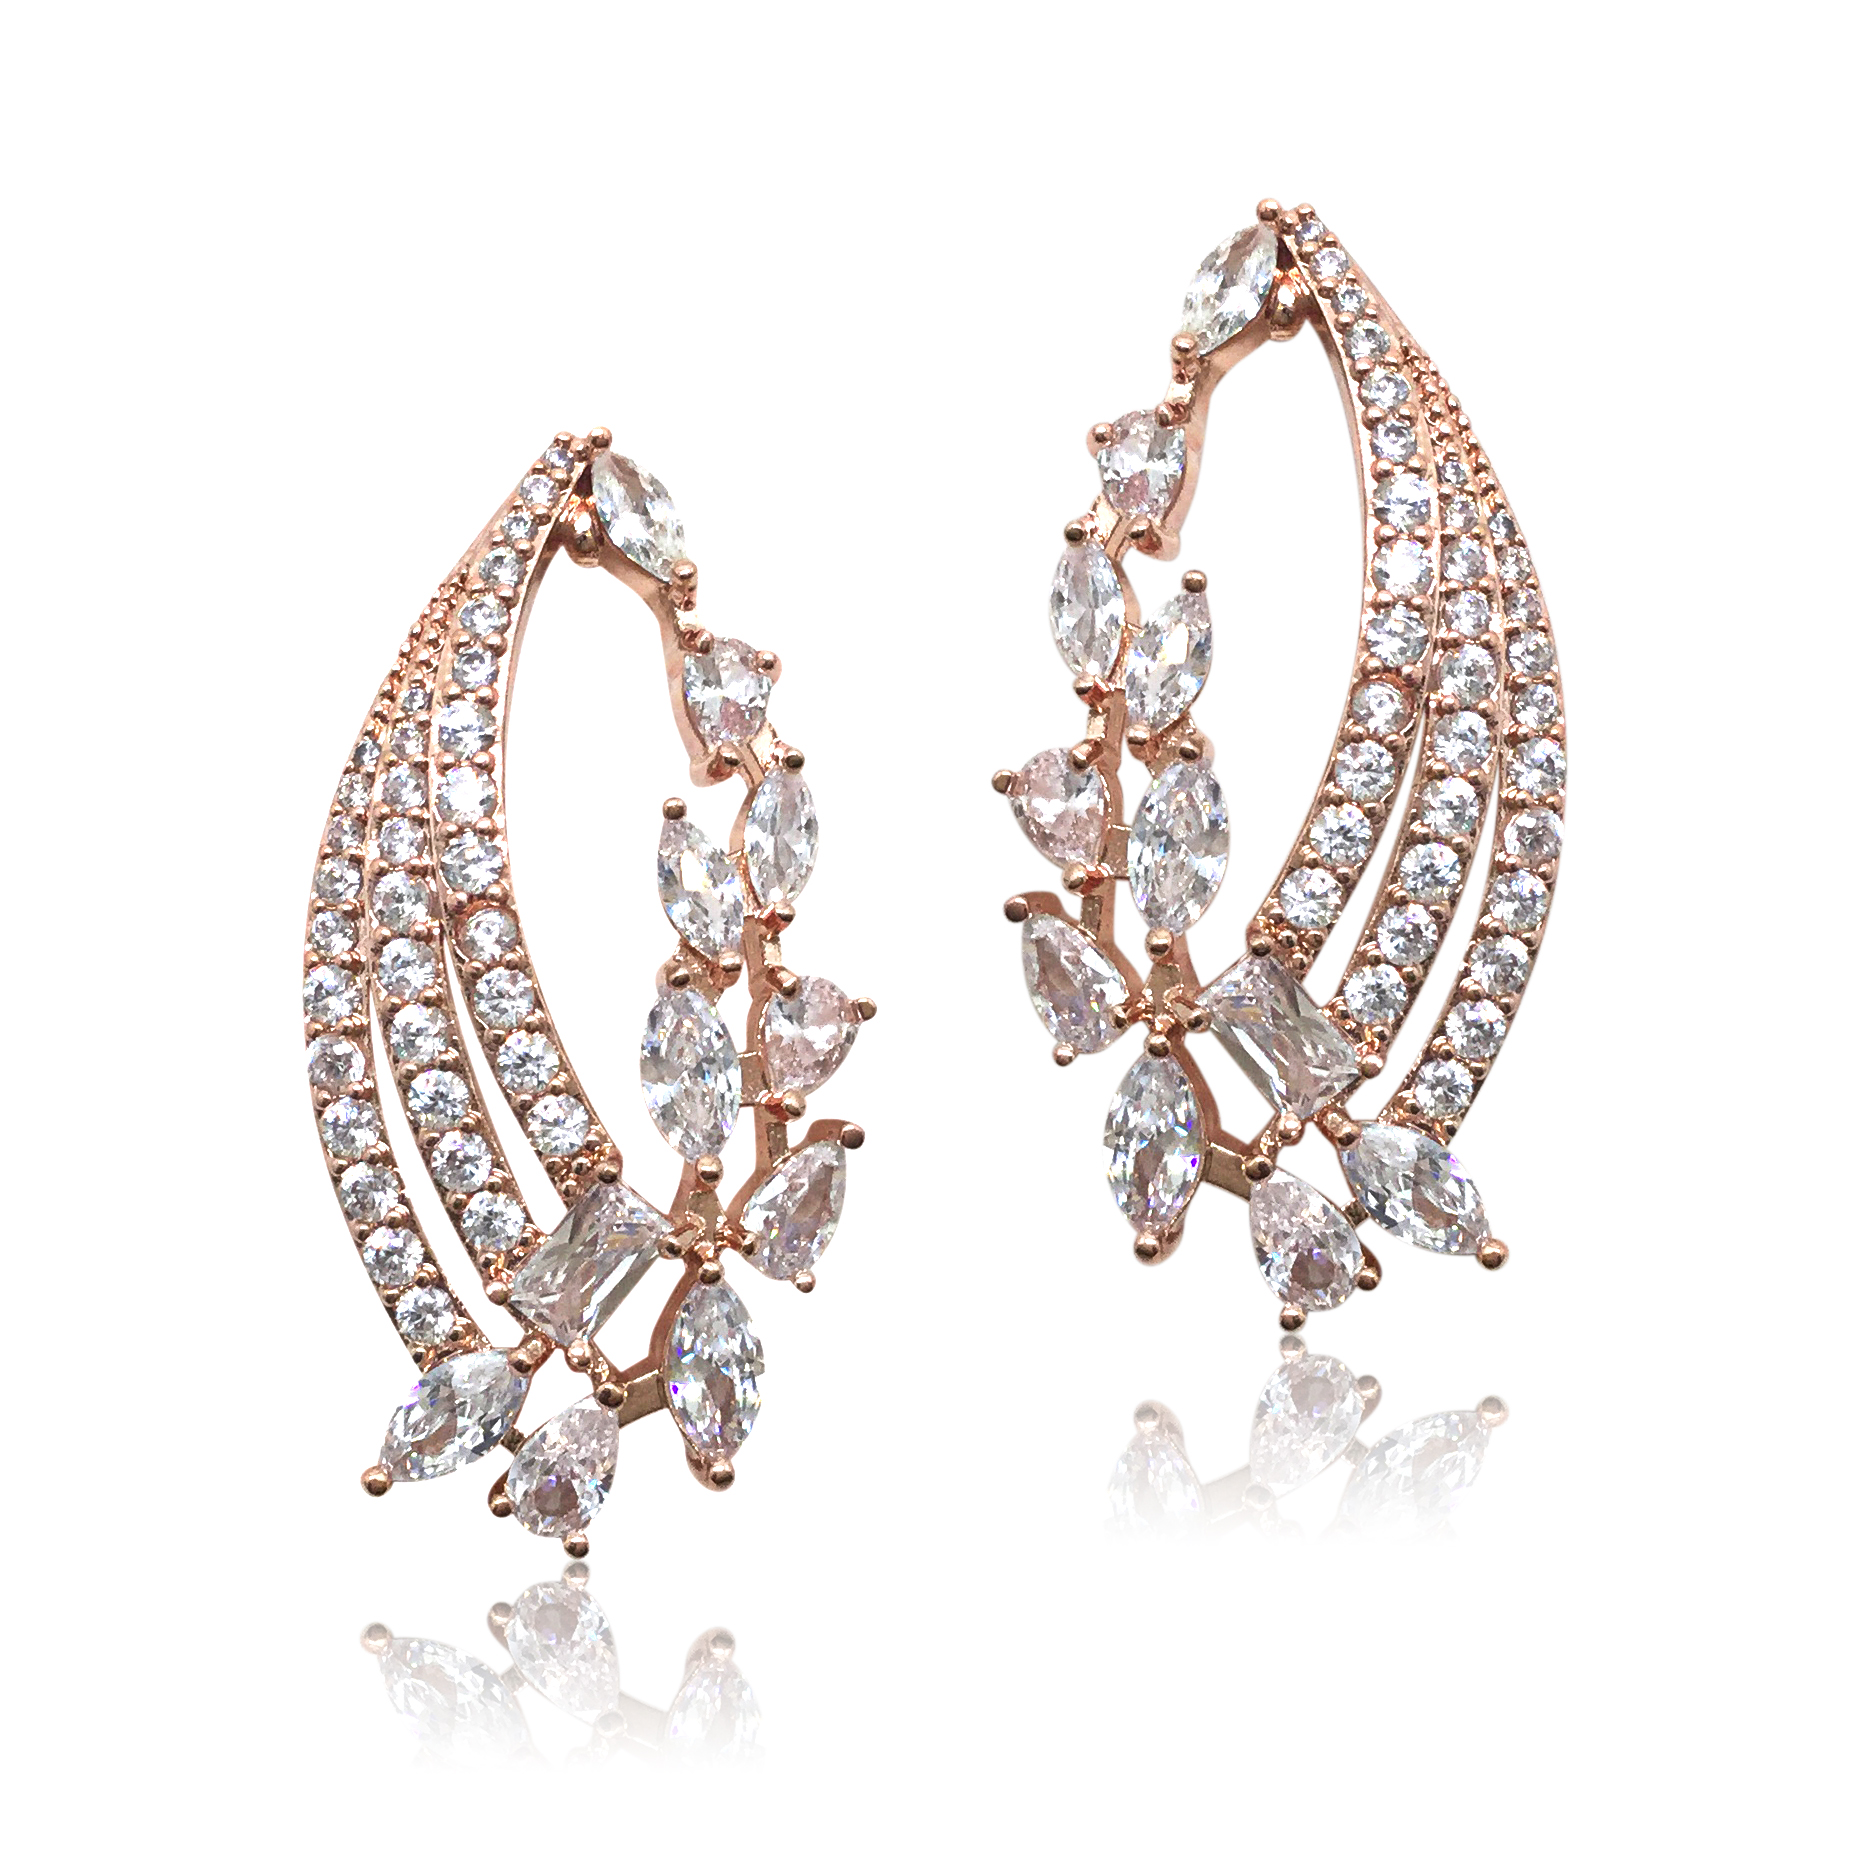 Rose gold stud earrings bridal|Scarlet|Jeanette Maree|Shop Online Now